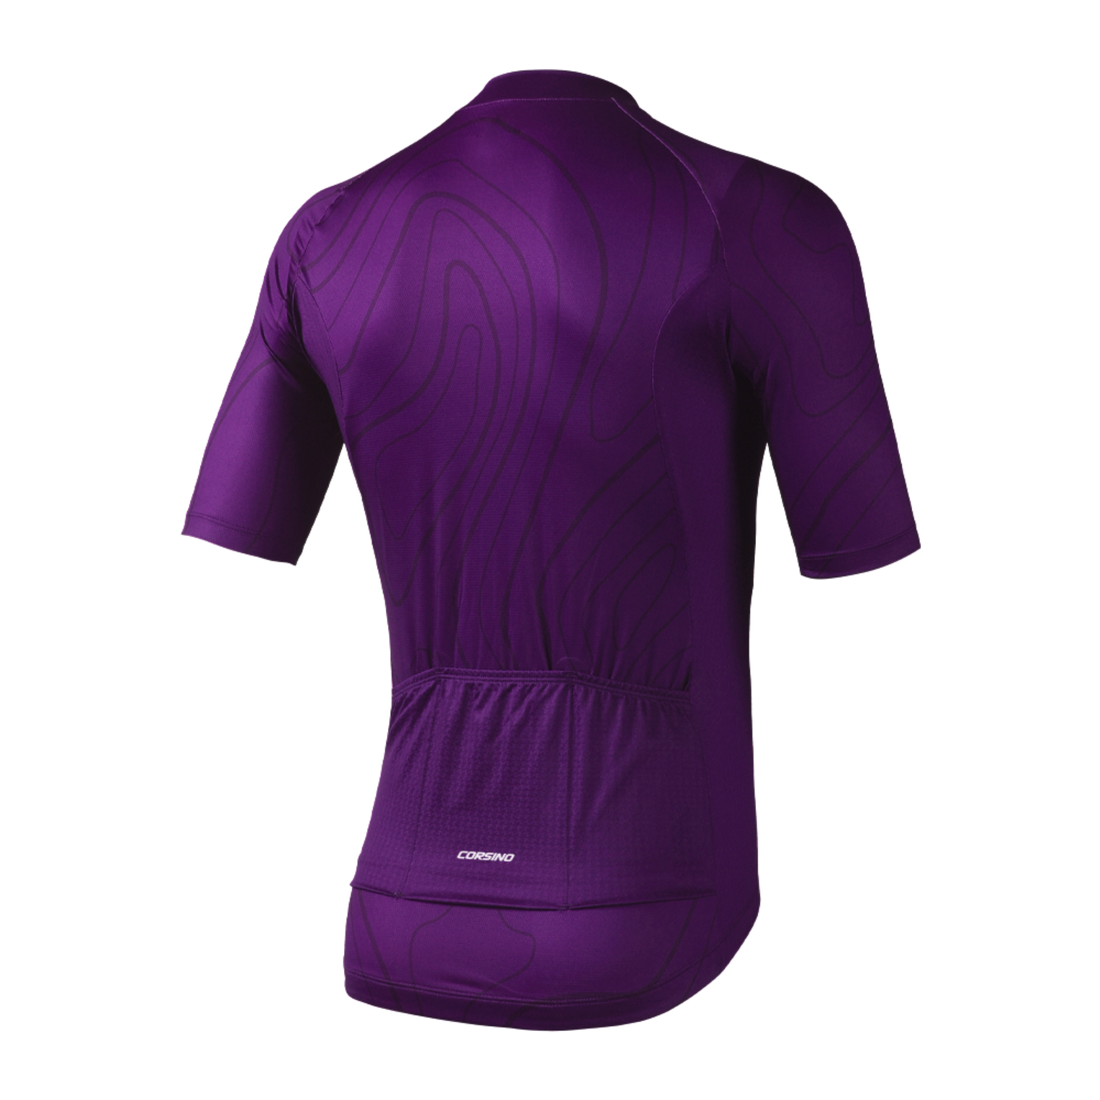 Back view of the Corsino Venice women's purple short sleeve cycling jersey.